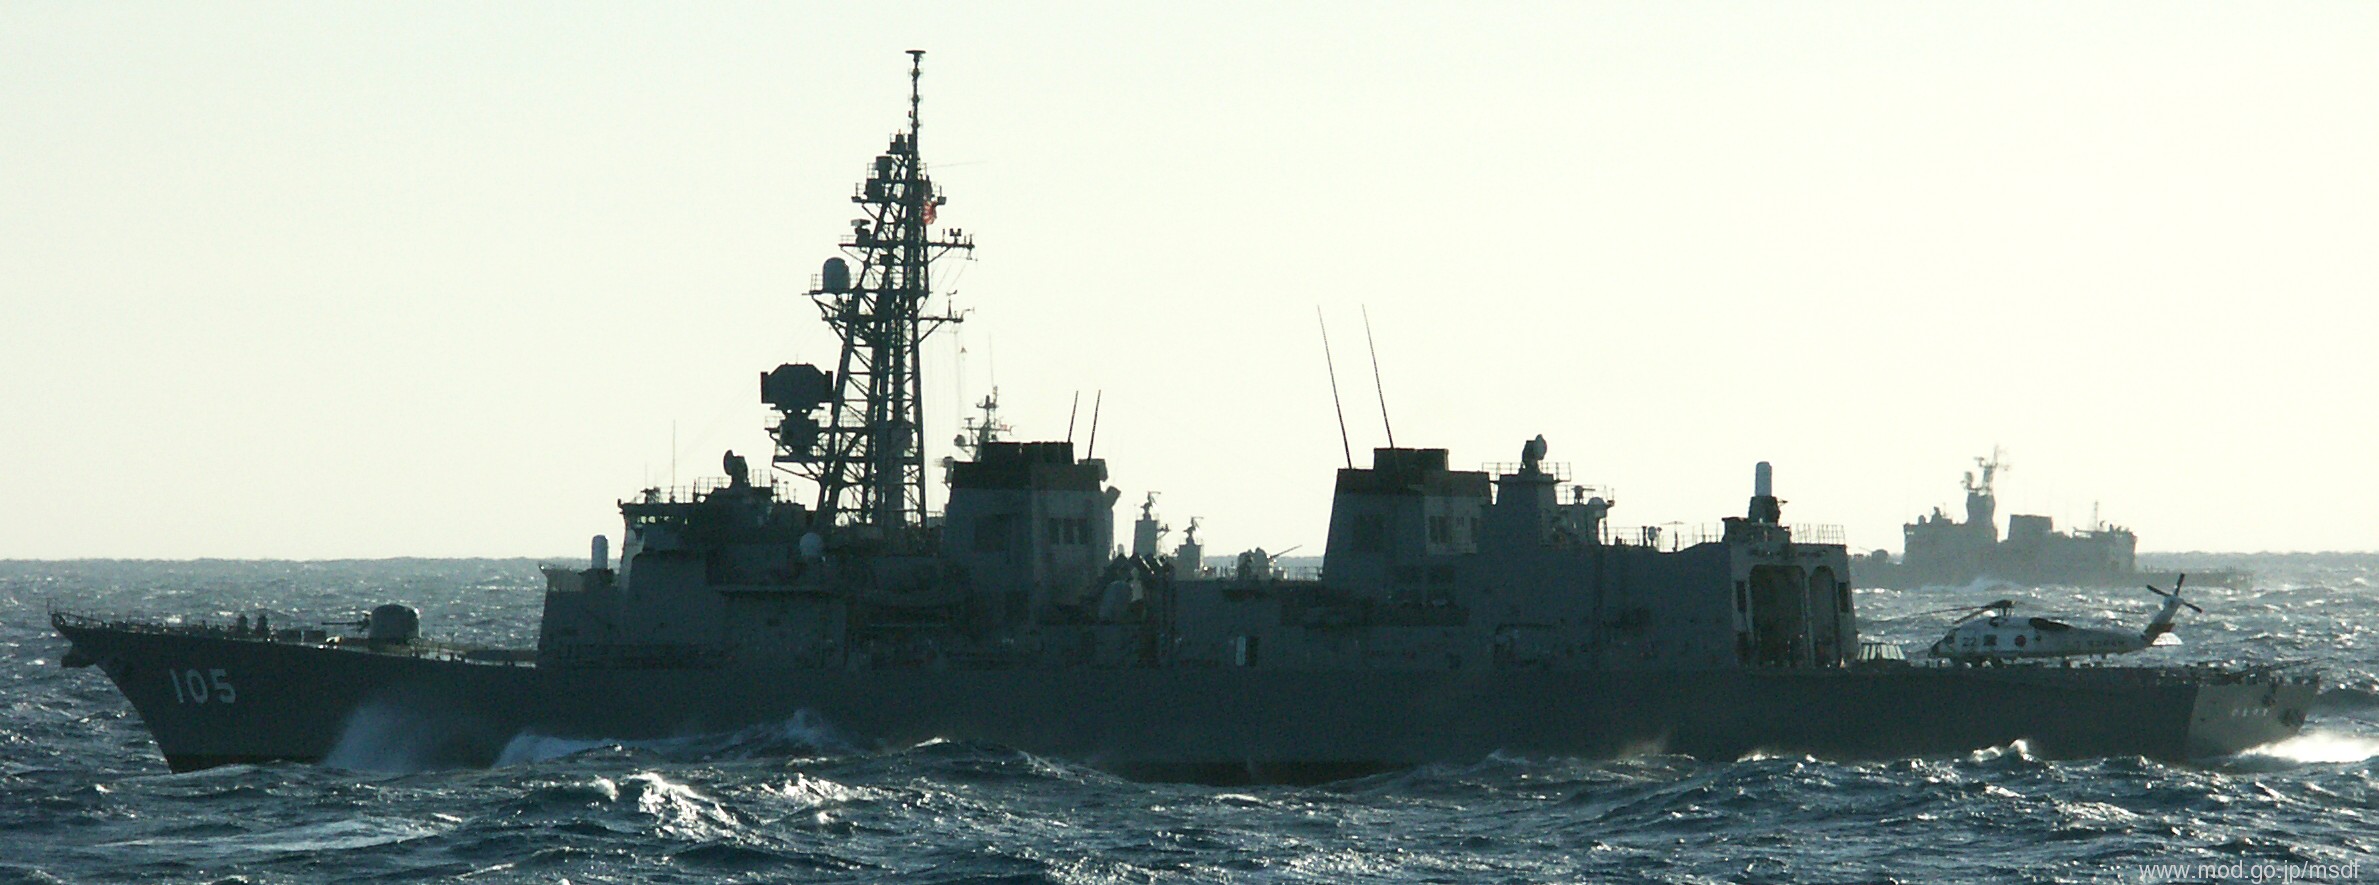 dd-105 js inazuma murasame class destroyer japan maritime self defense force jmsdf 09